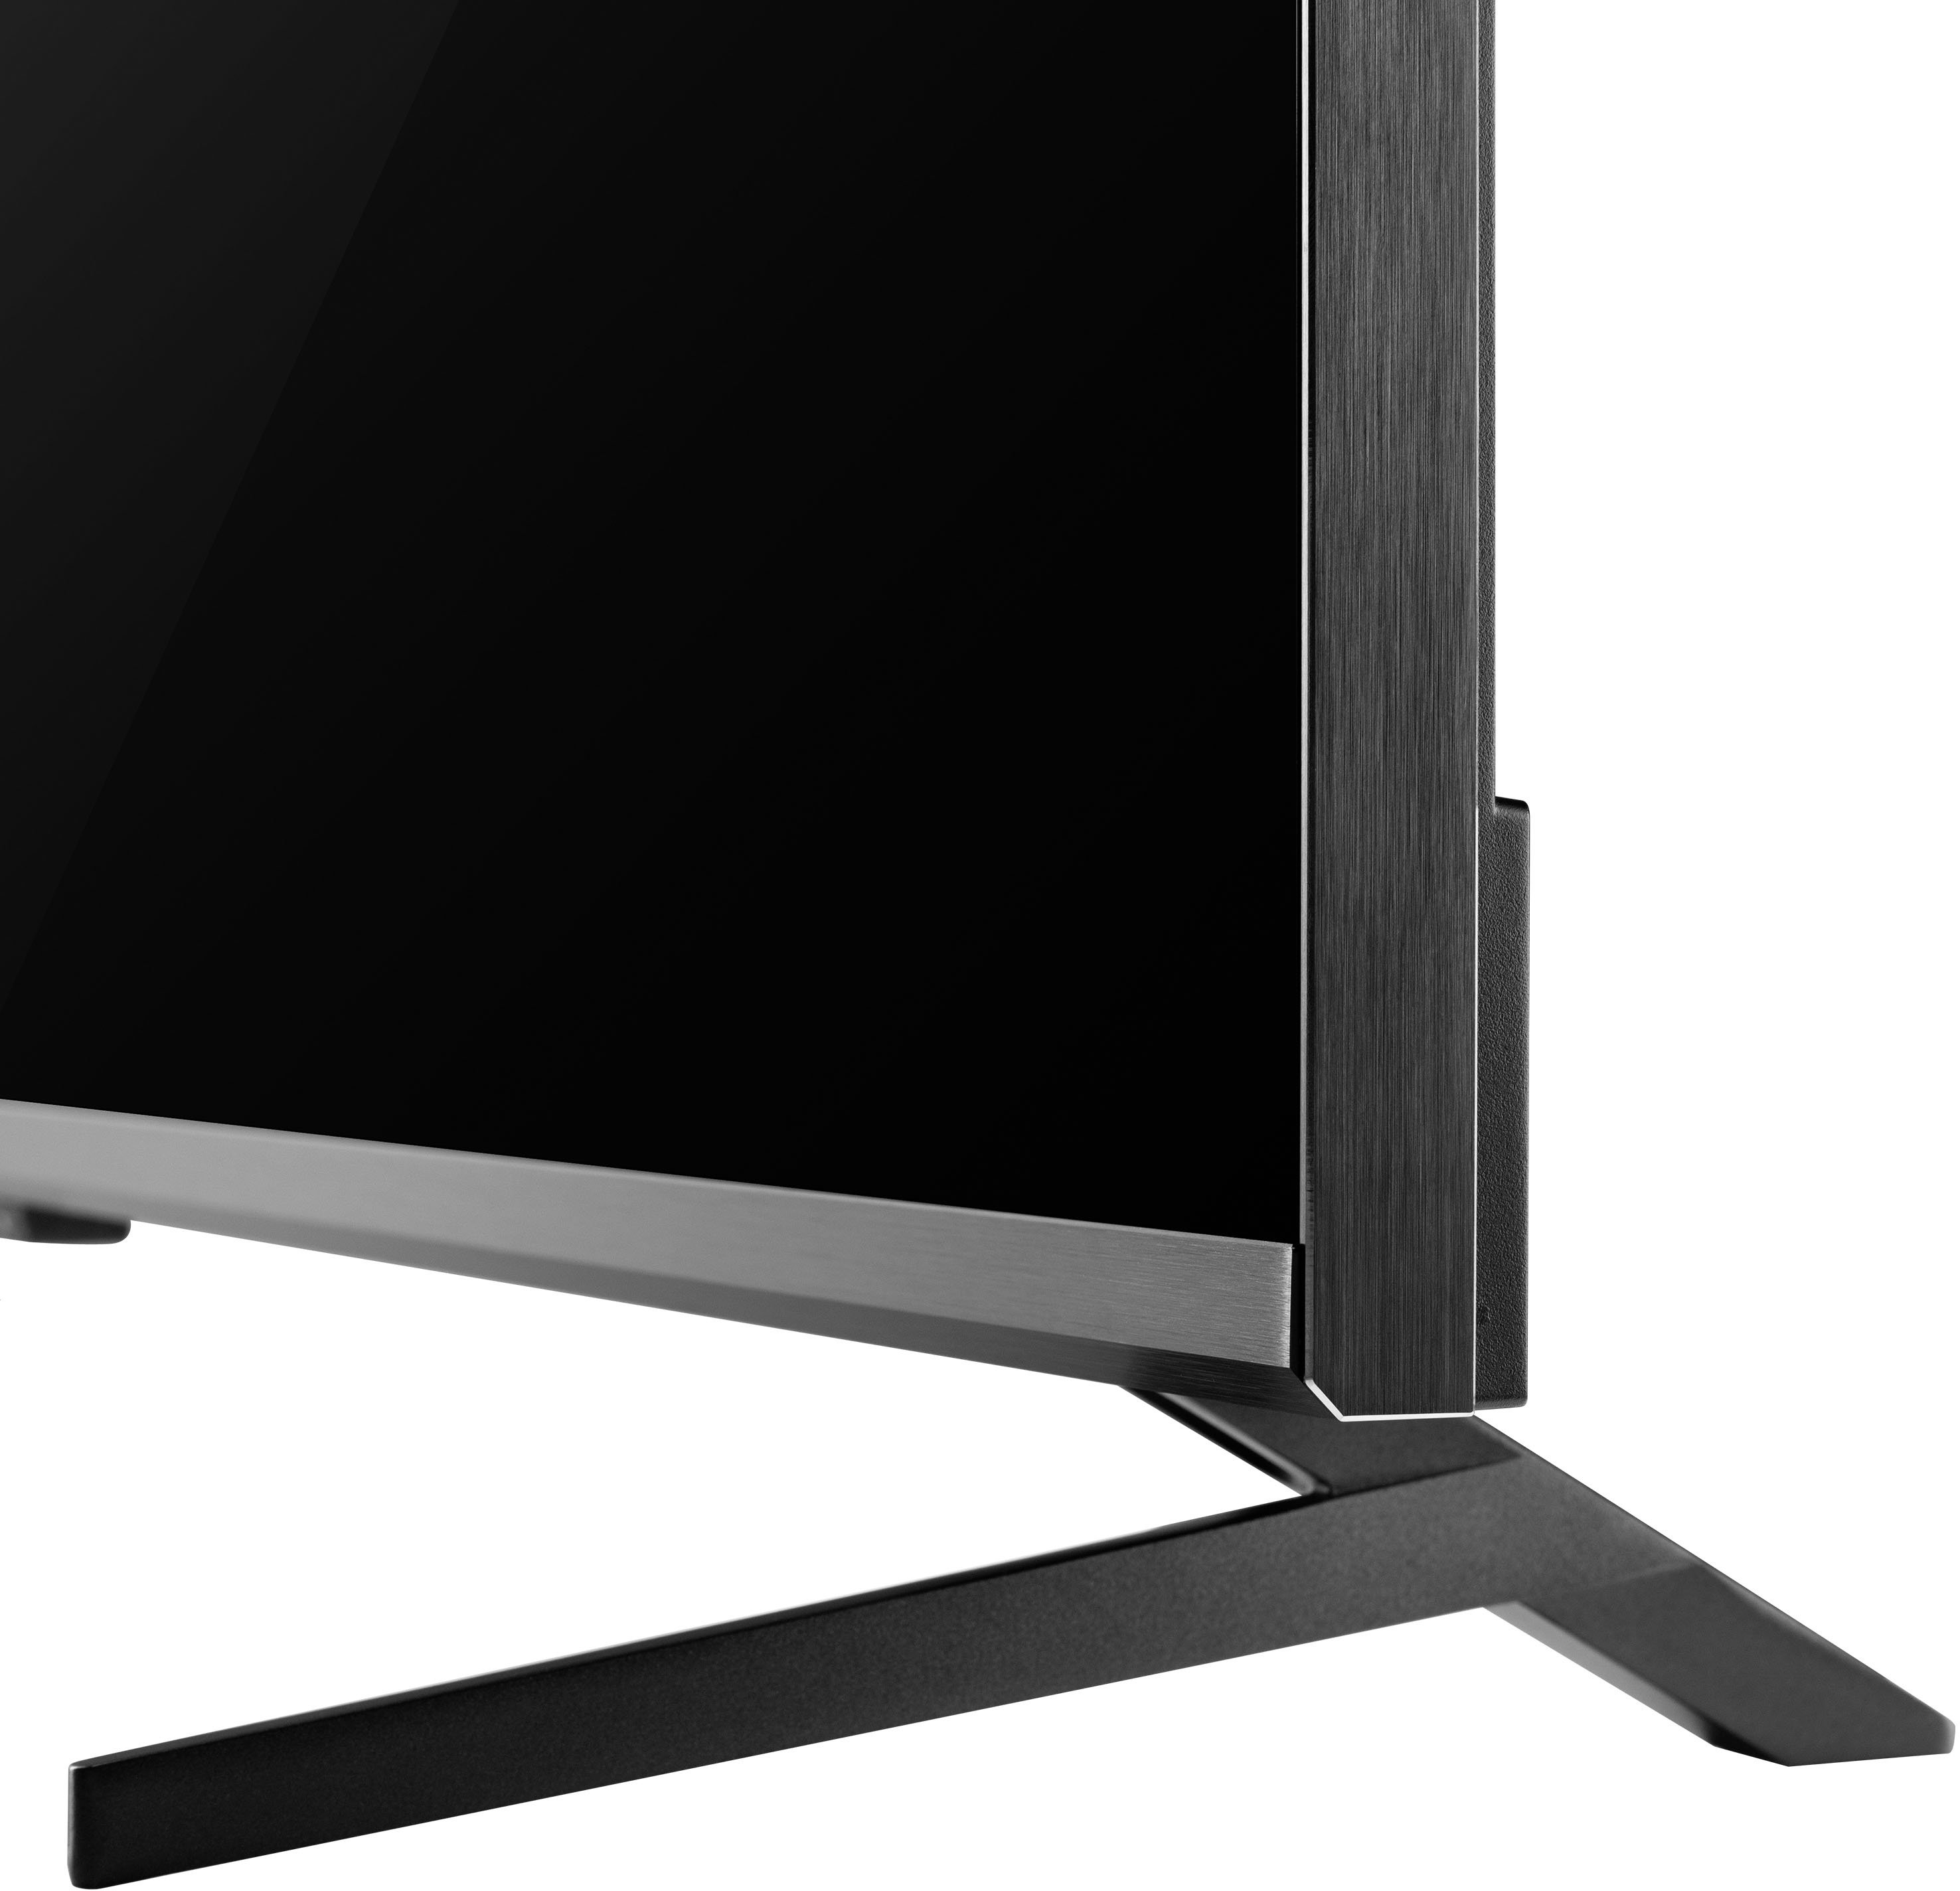 TCL 55 Class 4-Series LED 4K UHD Smart Google TV 55S446 - Best Buy